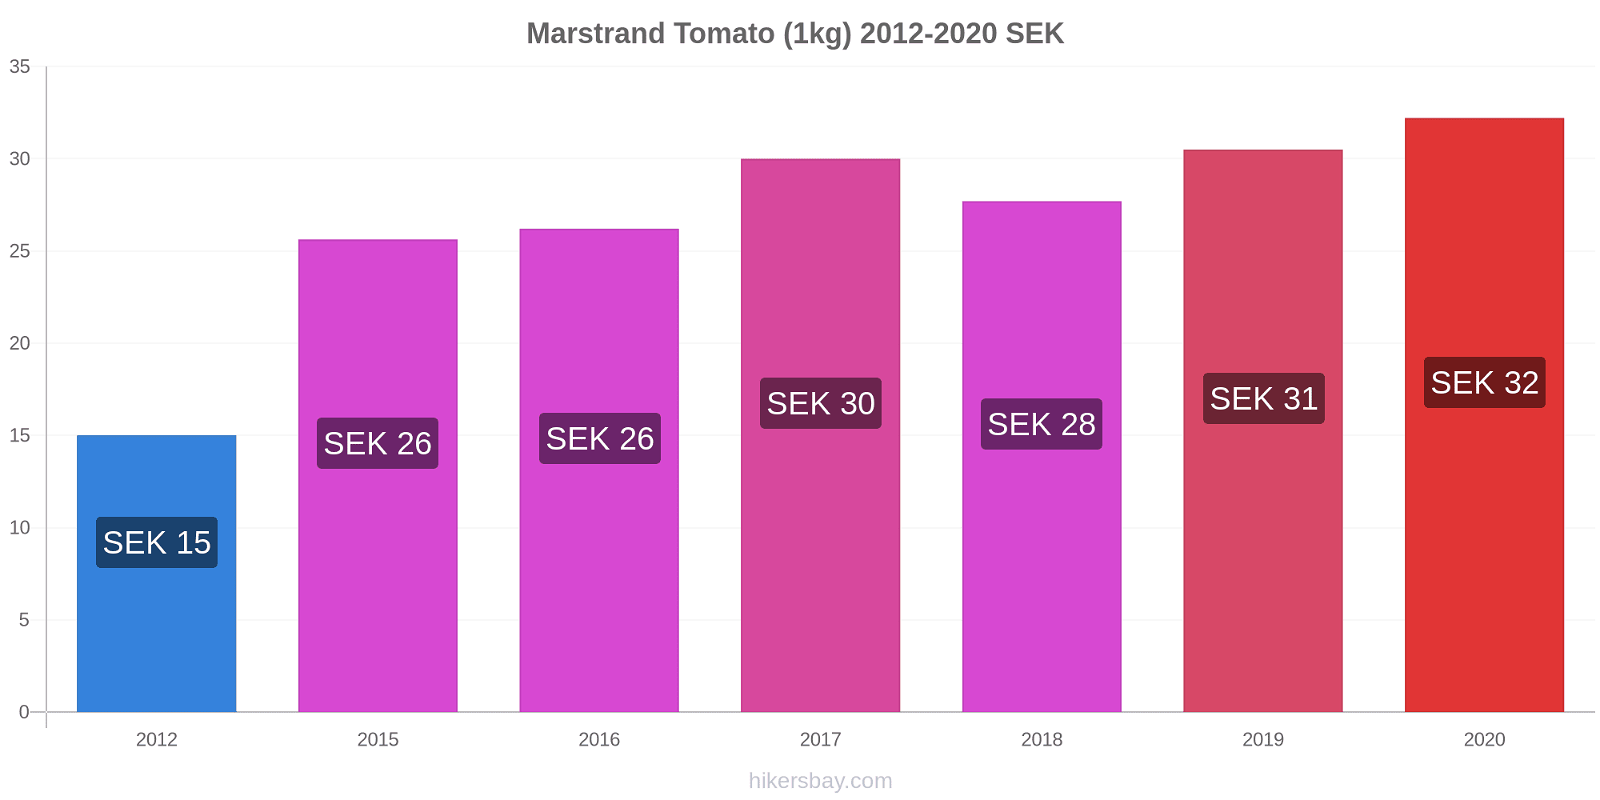 Marstrand price changes Tomato (1kg) hikersbay.com